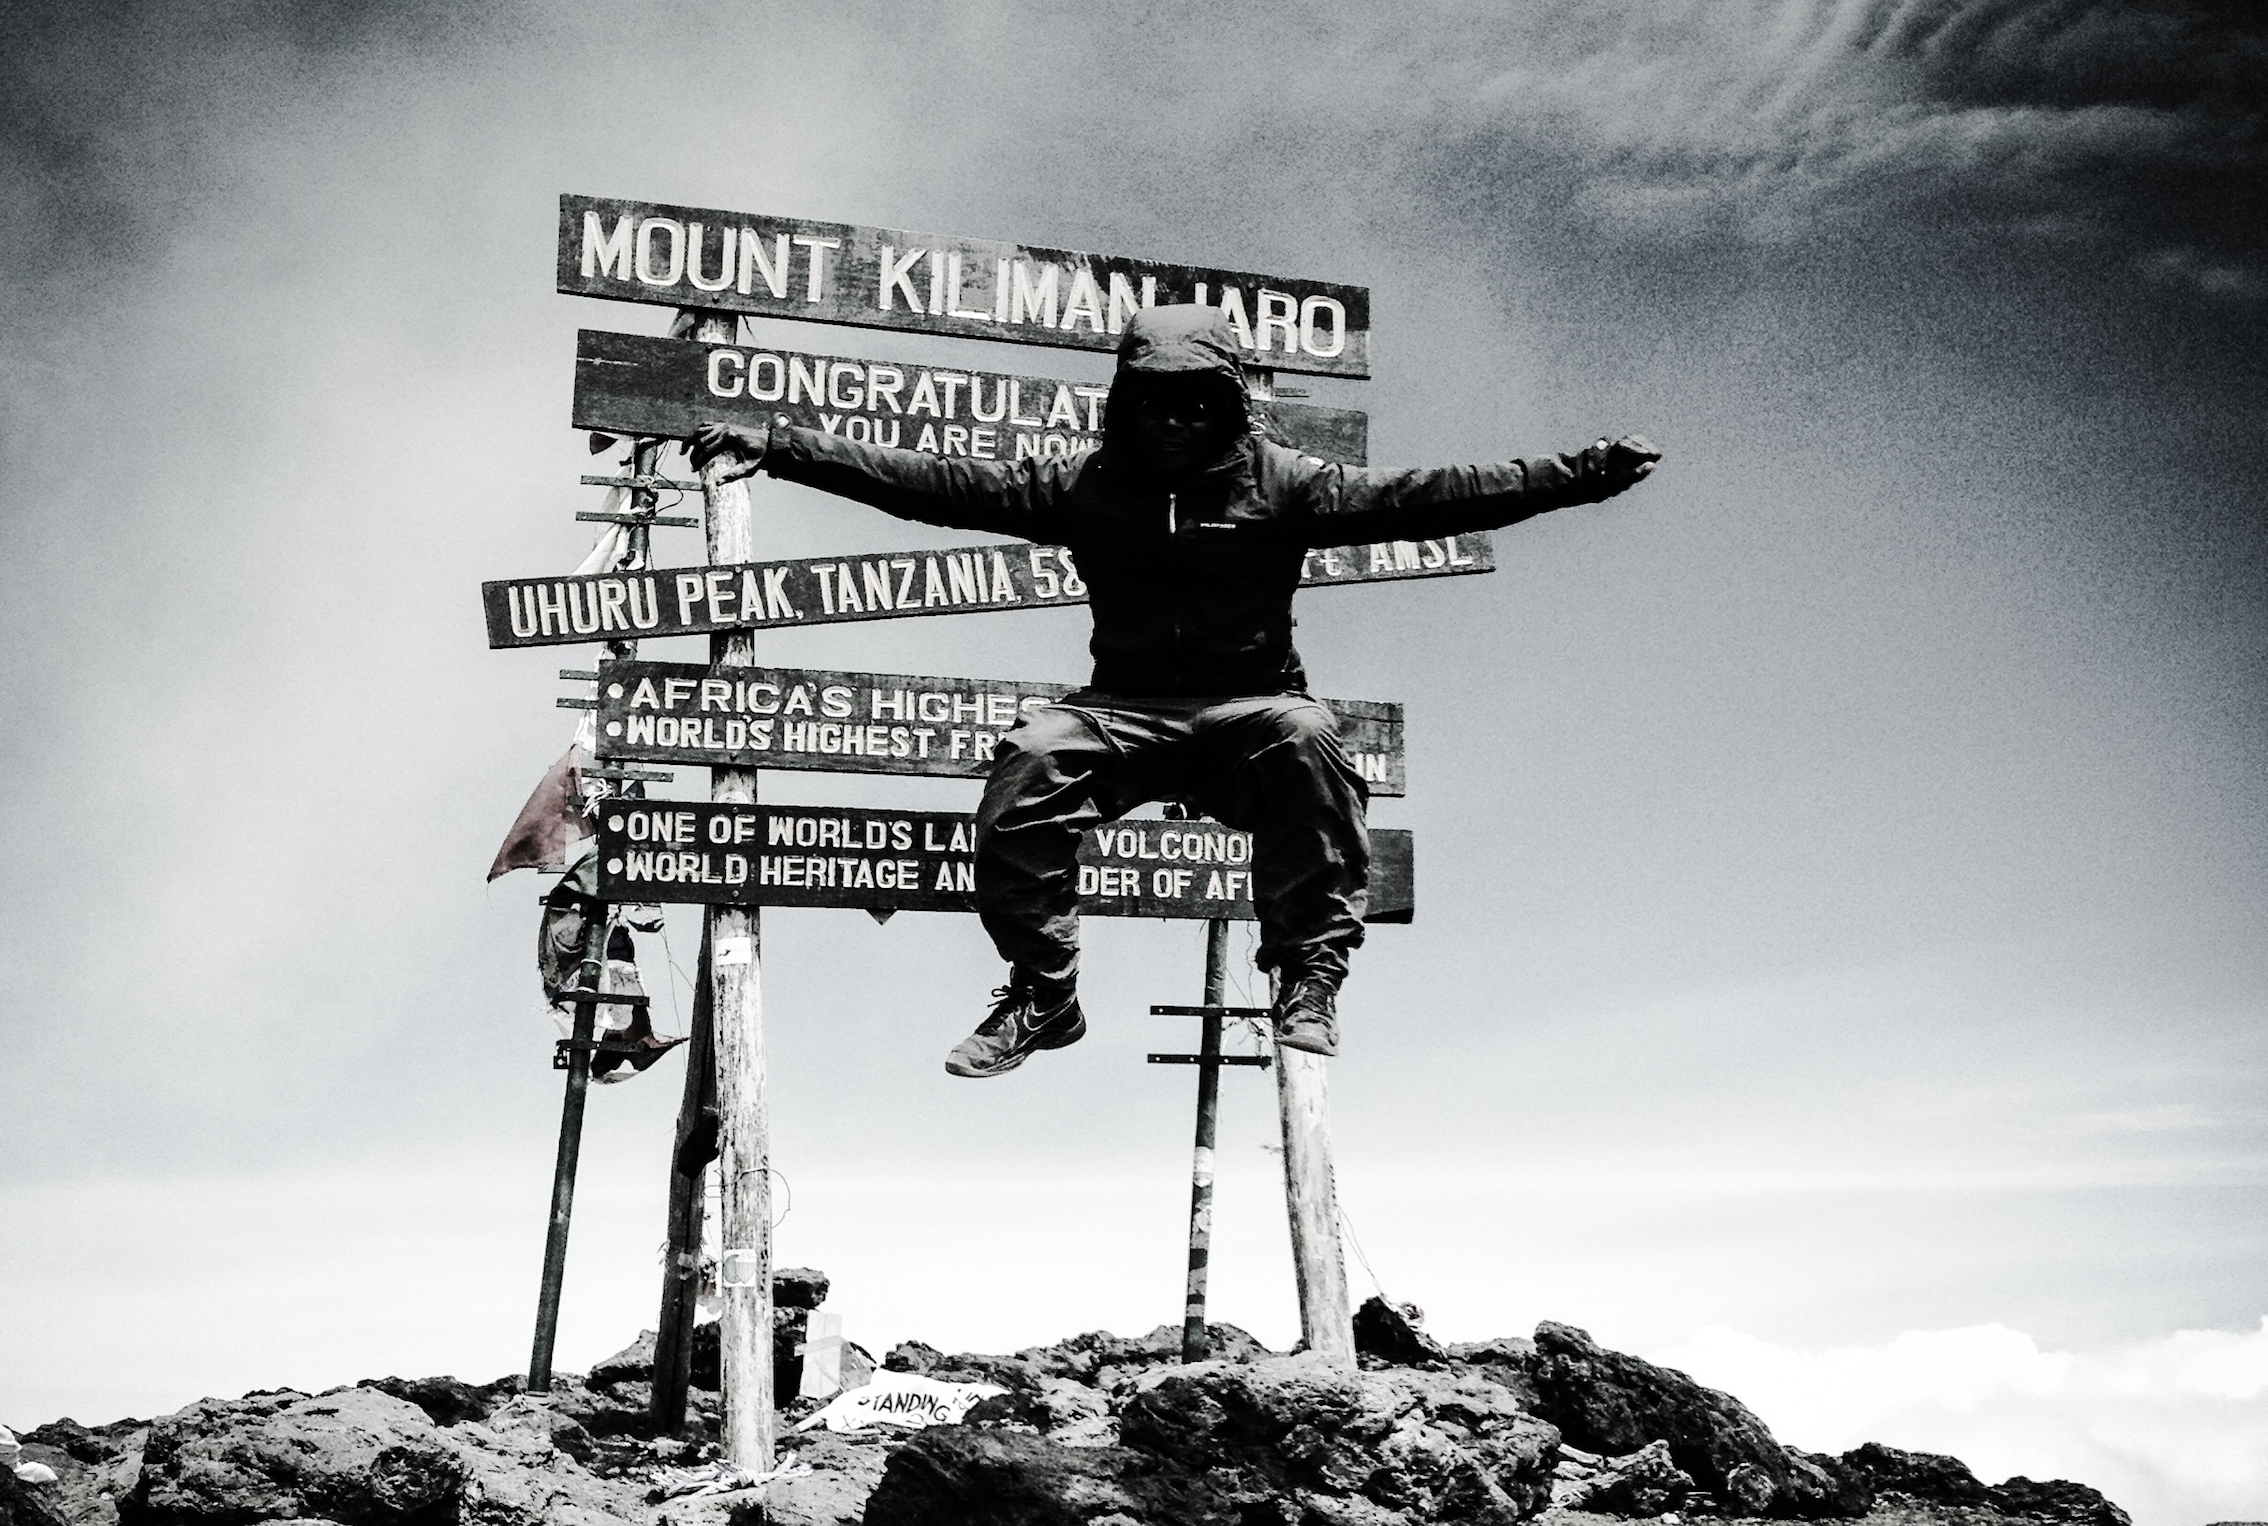 Kilimanjaro Thumbnail Image